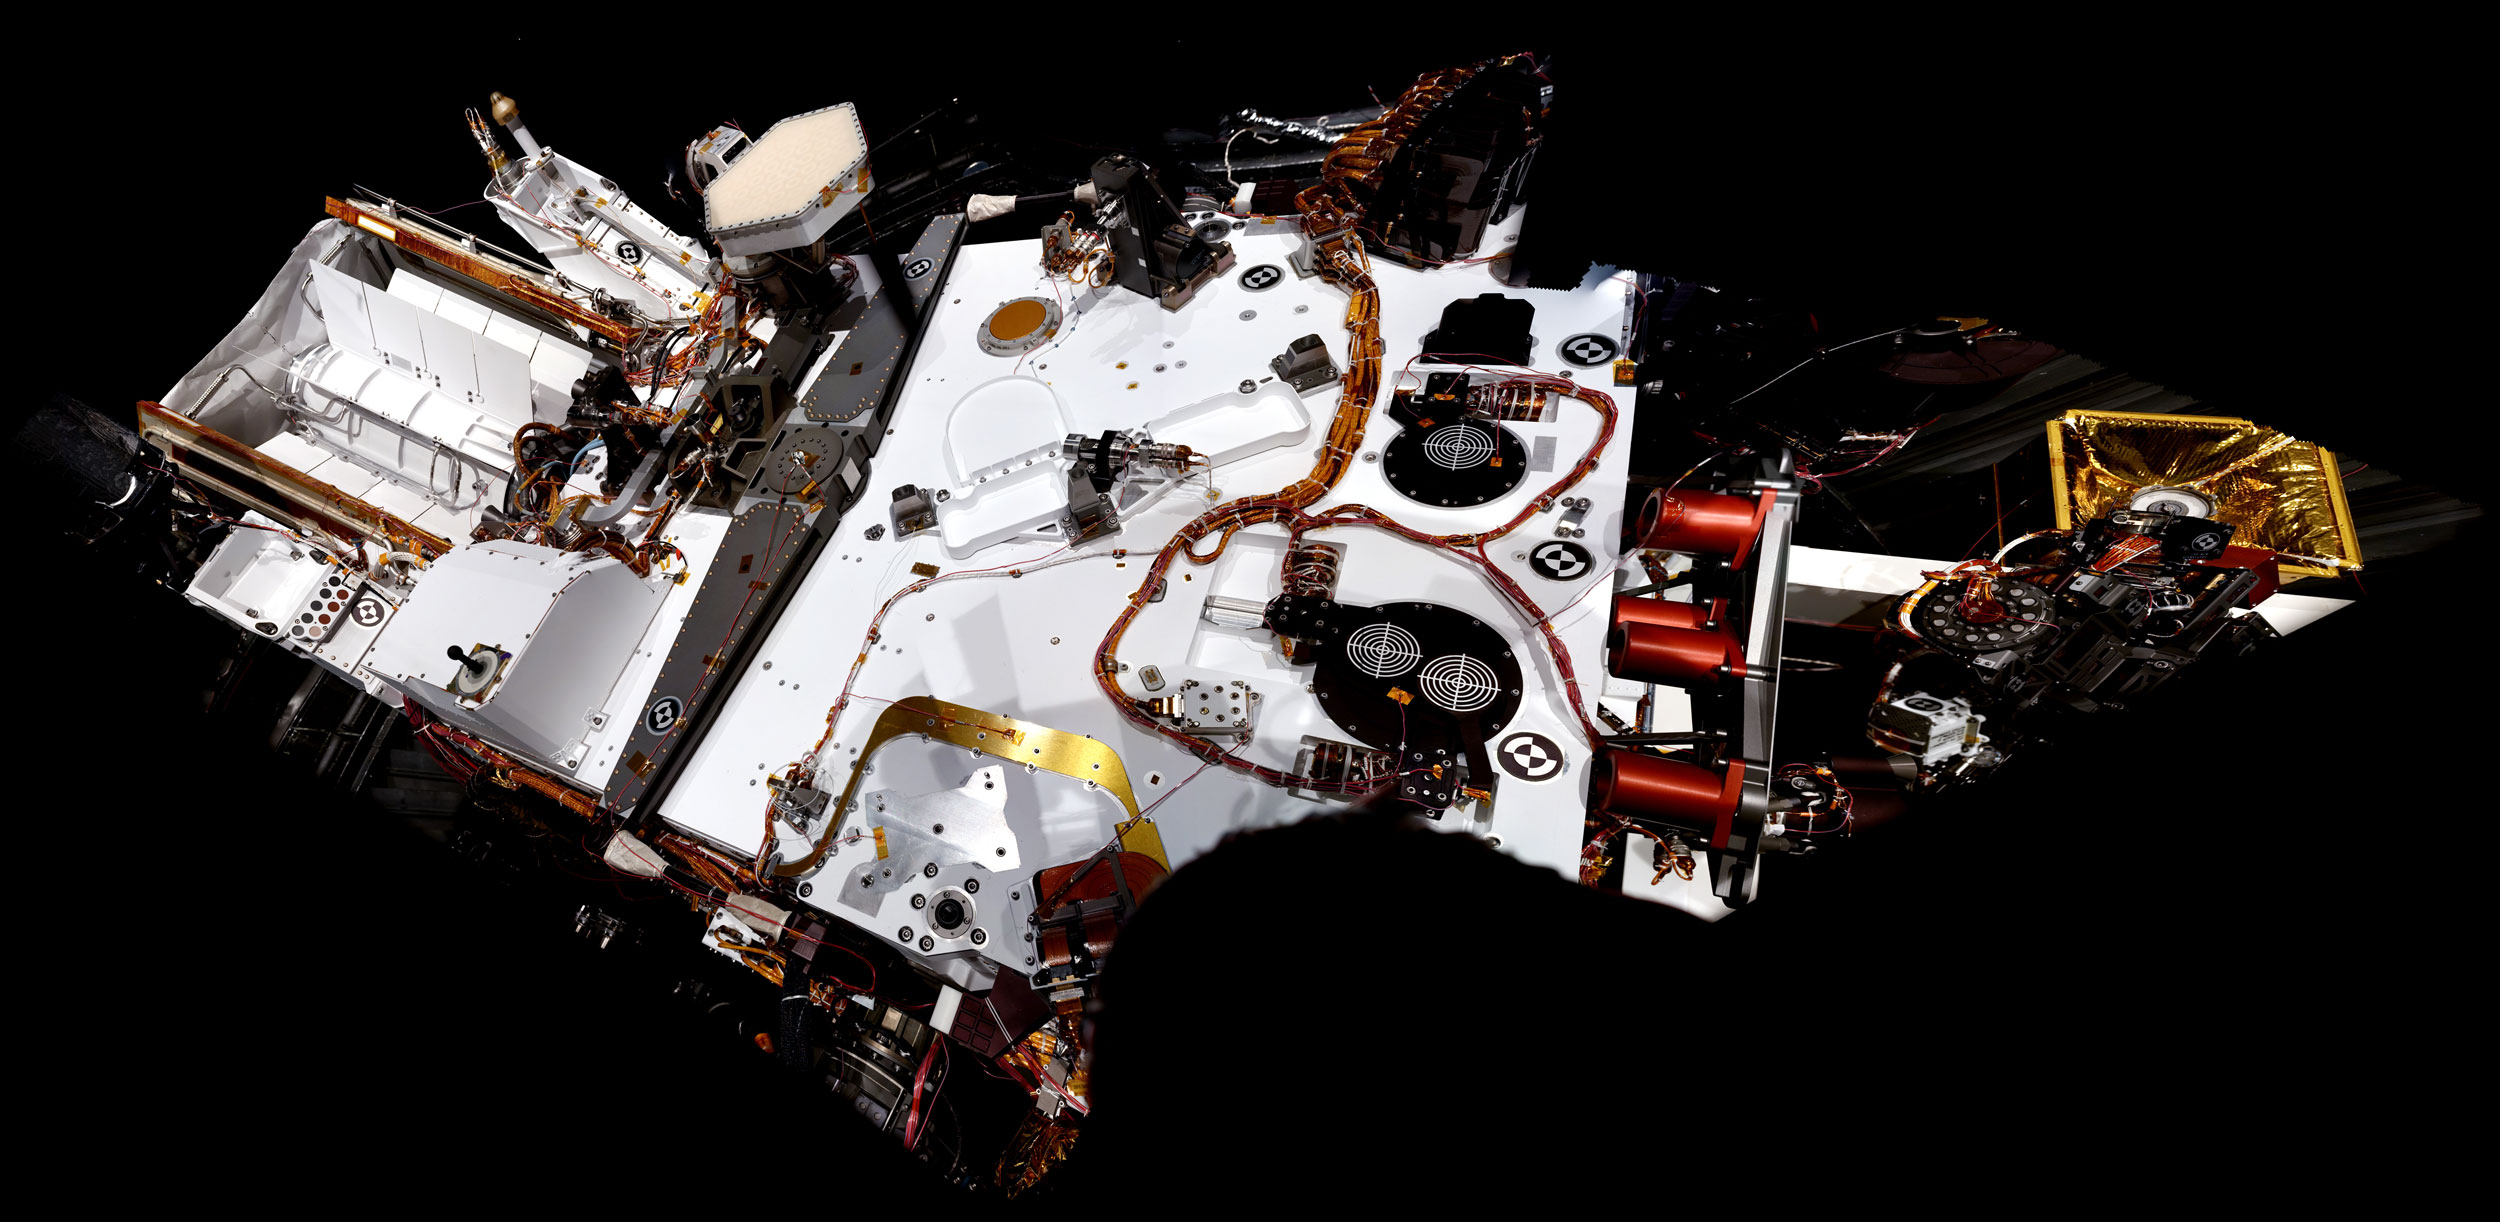 Mast Camera View of Curiosity's Deck